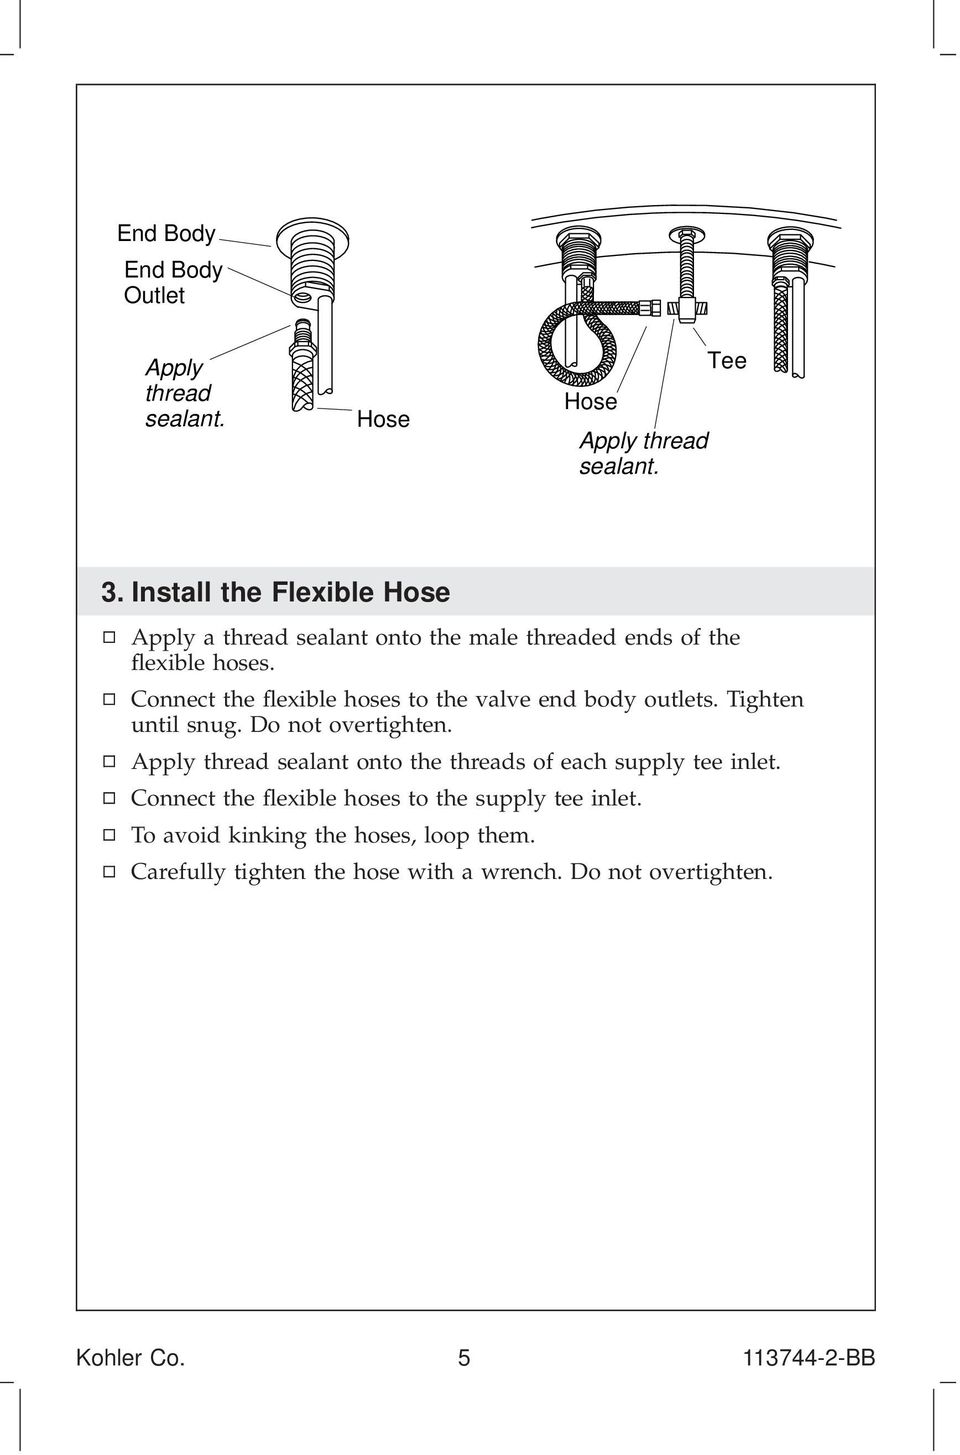 Connect the flexible hoses to the valve end body outlets. Tighten until snug. Do not overtighten.